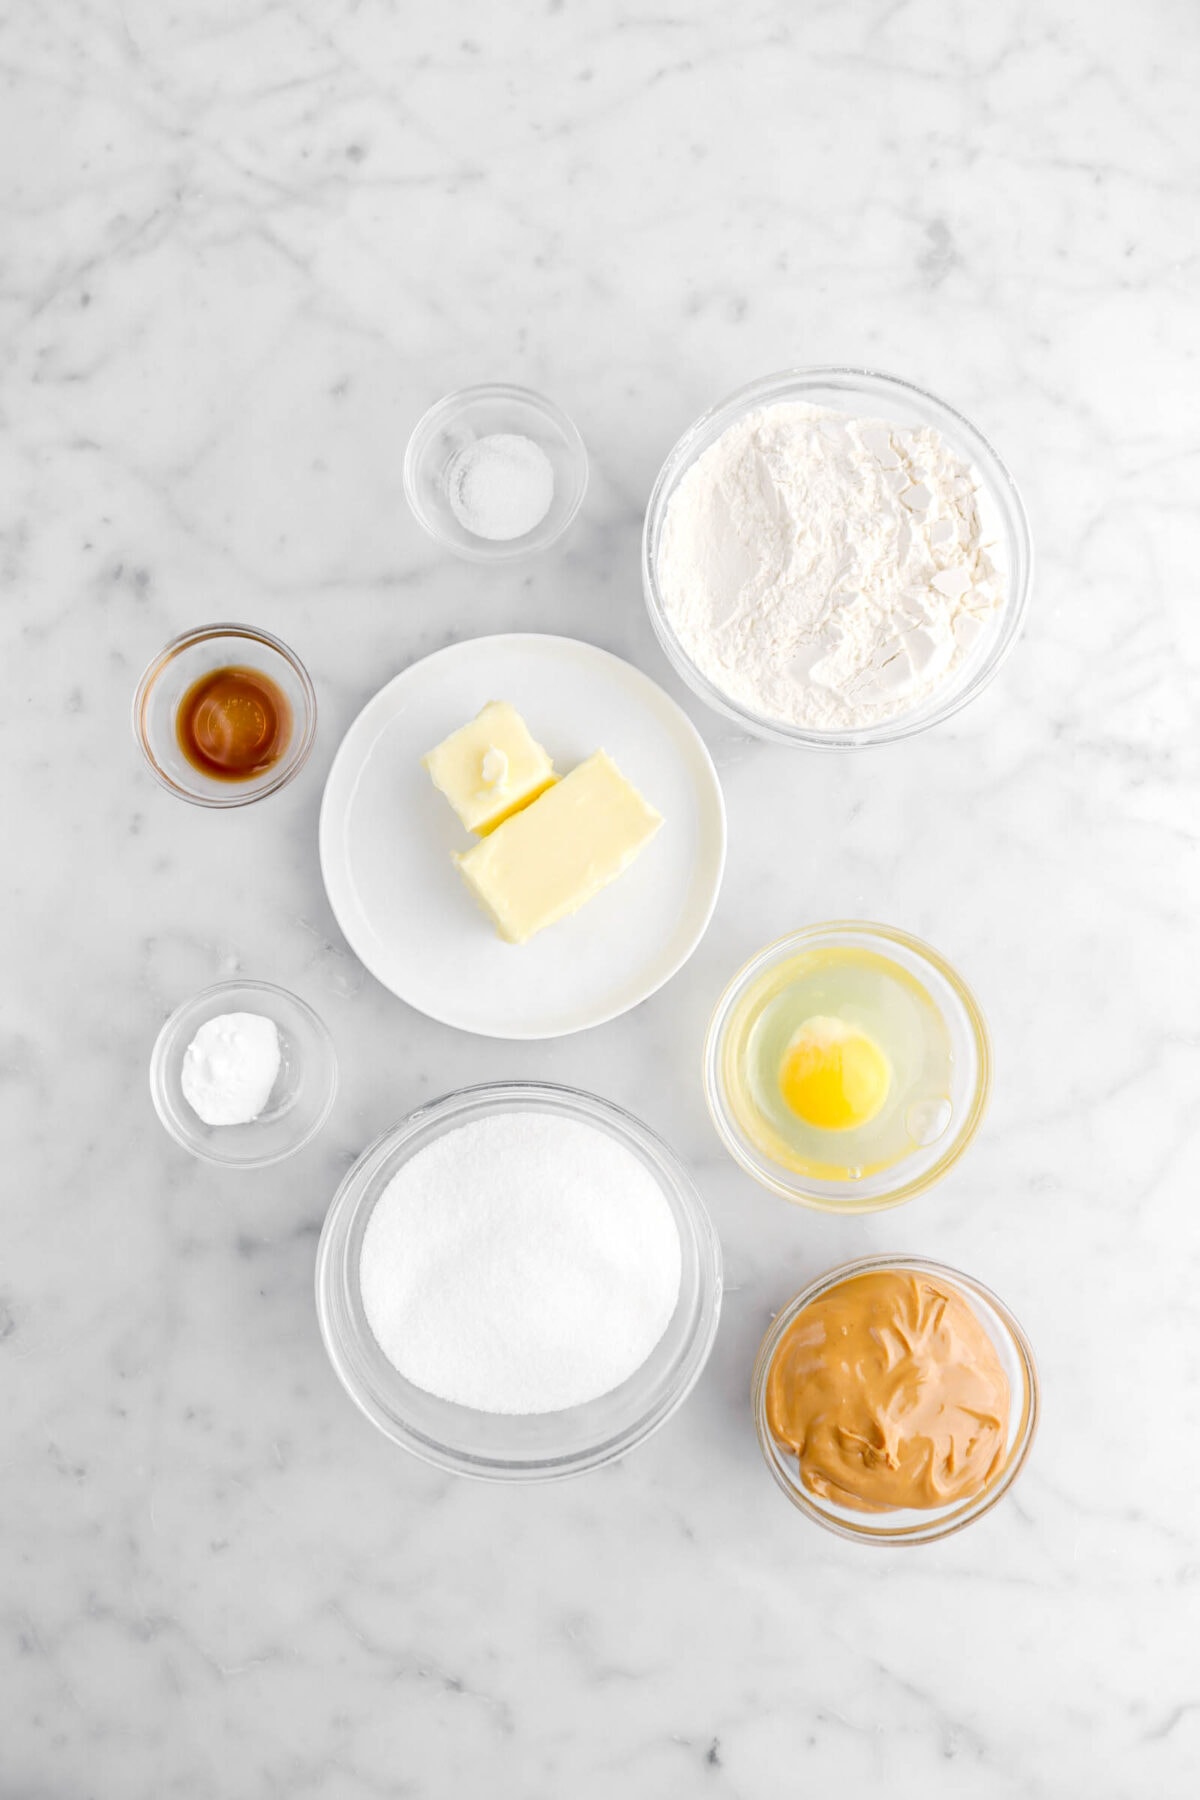 salt, flour, butter, vanilla, baking soda, egg, sugar, and creamy peanut butter on marble surface.